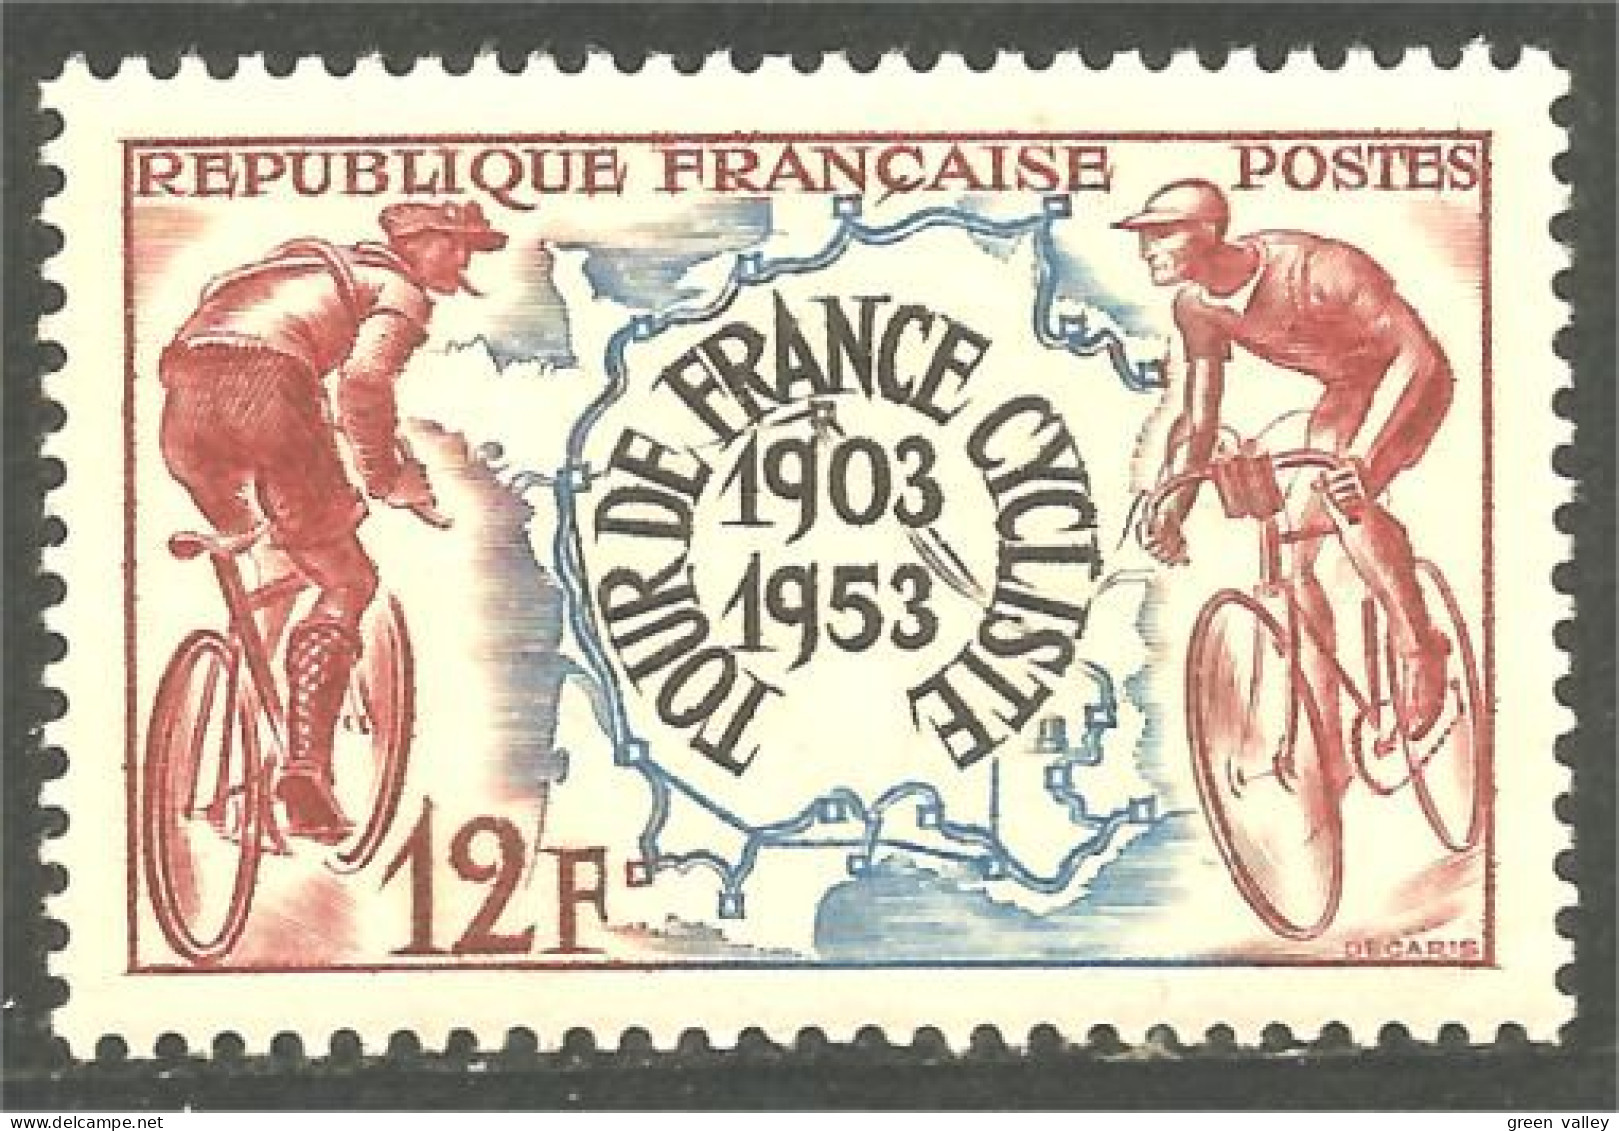 339 France Yv 955 Cyclisme Bicyclette Bicycle Radfahr Ciclismo MNH ** Neuf SC (955-1b) - Cyclisme